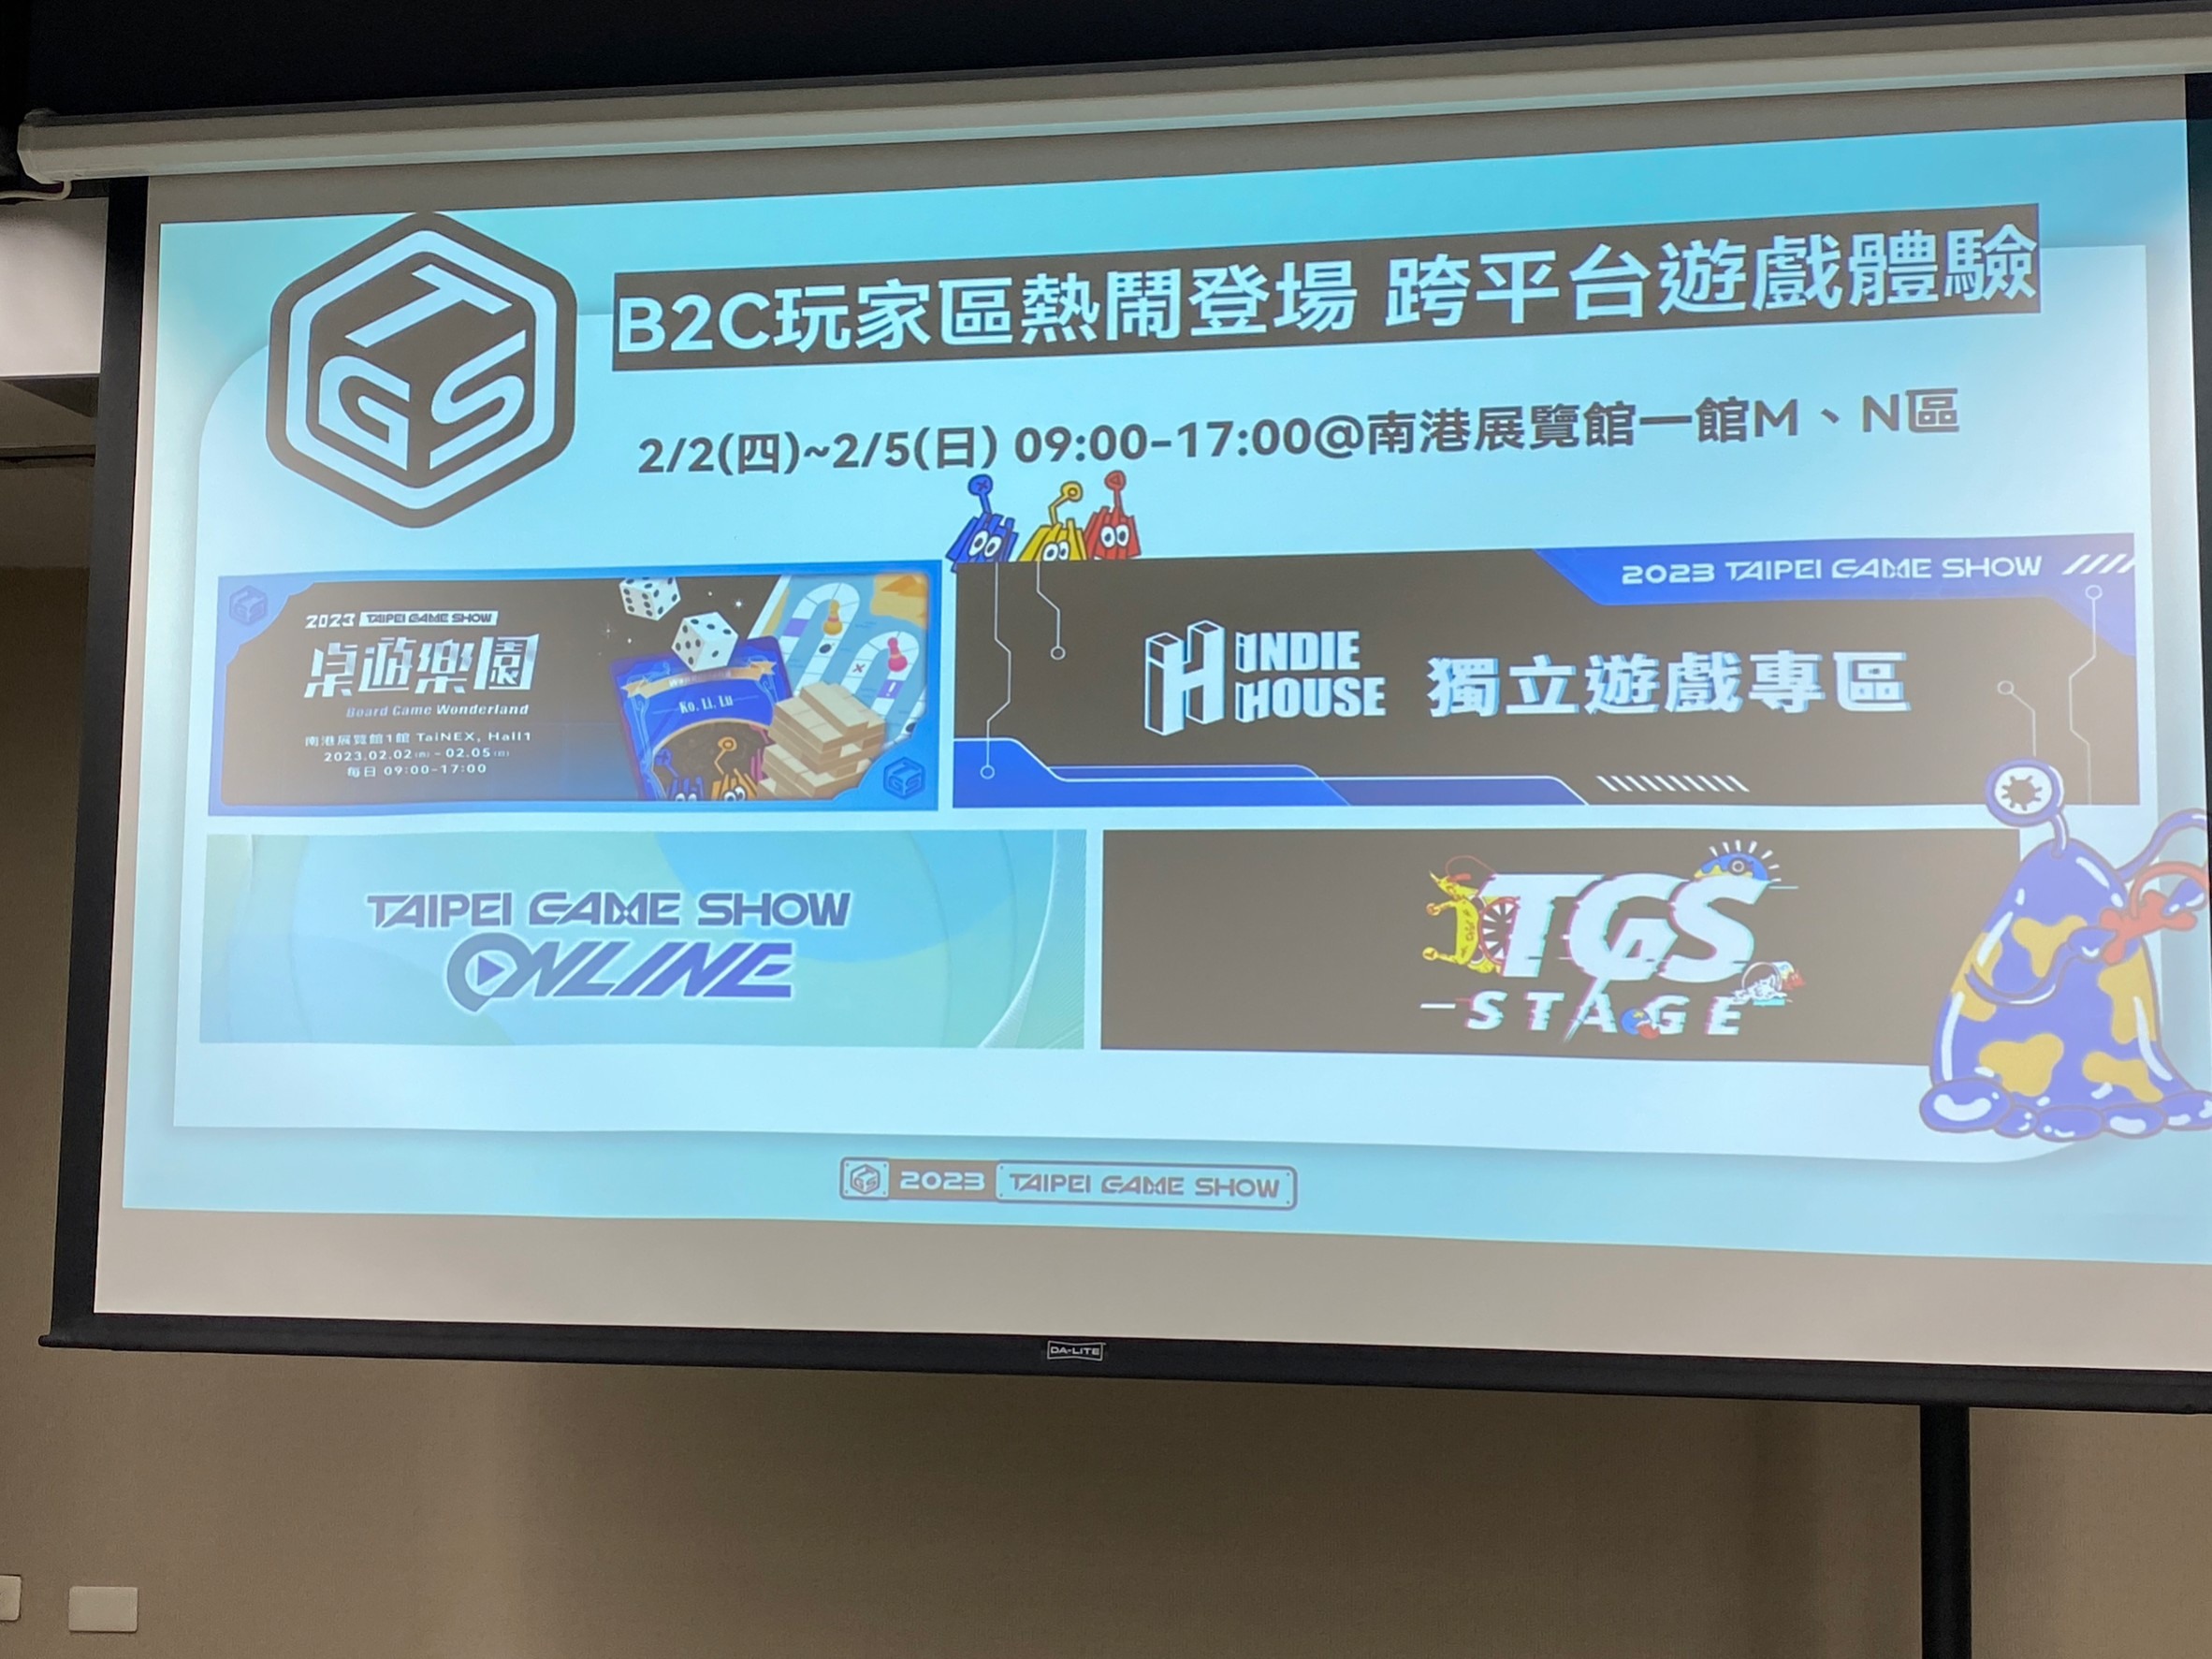 【TpGS 23】台北电玩展明年 2 月登场预估将吸引 30 万人次 光荣特库摩首度参展插图